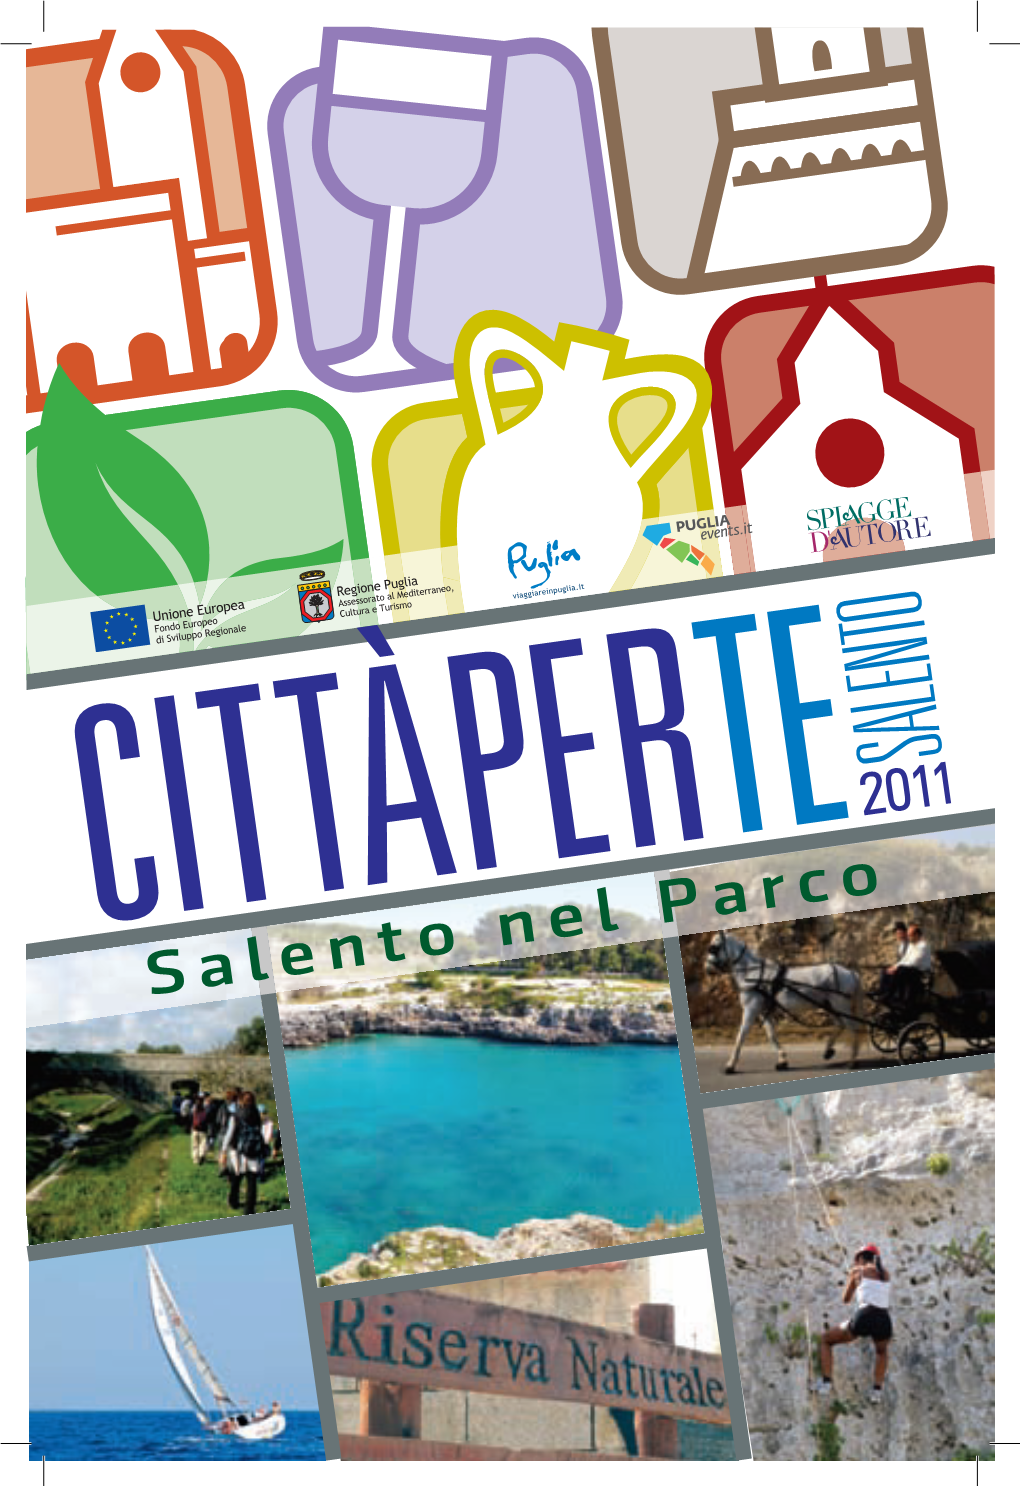 Salento Nel Parco II Ittà Aperte 2011 Off Re Quest’Anno Un’Opportu- Nità in Più Per I Turisti in Puglia